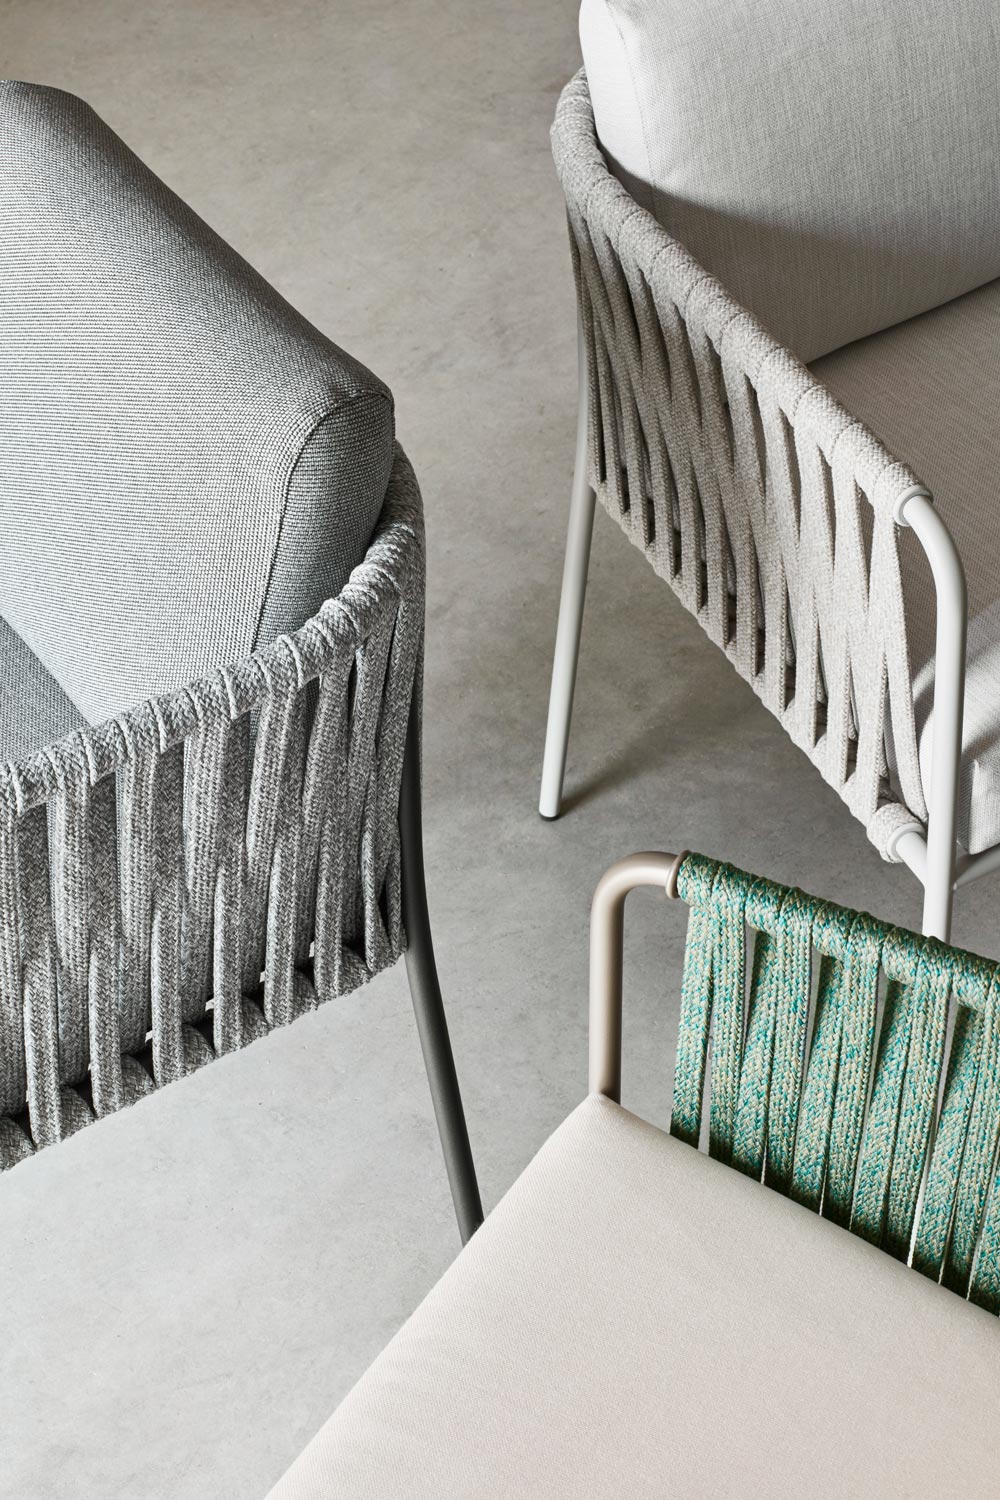 outdoor kollektion - stühle - stuhl mit polyesterseil nido